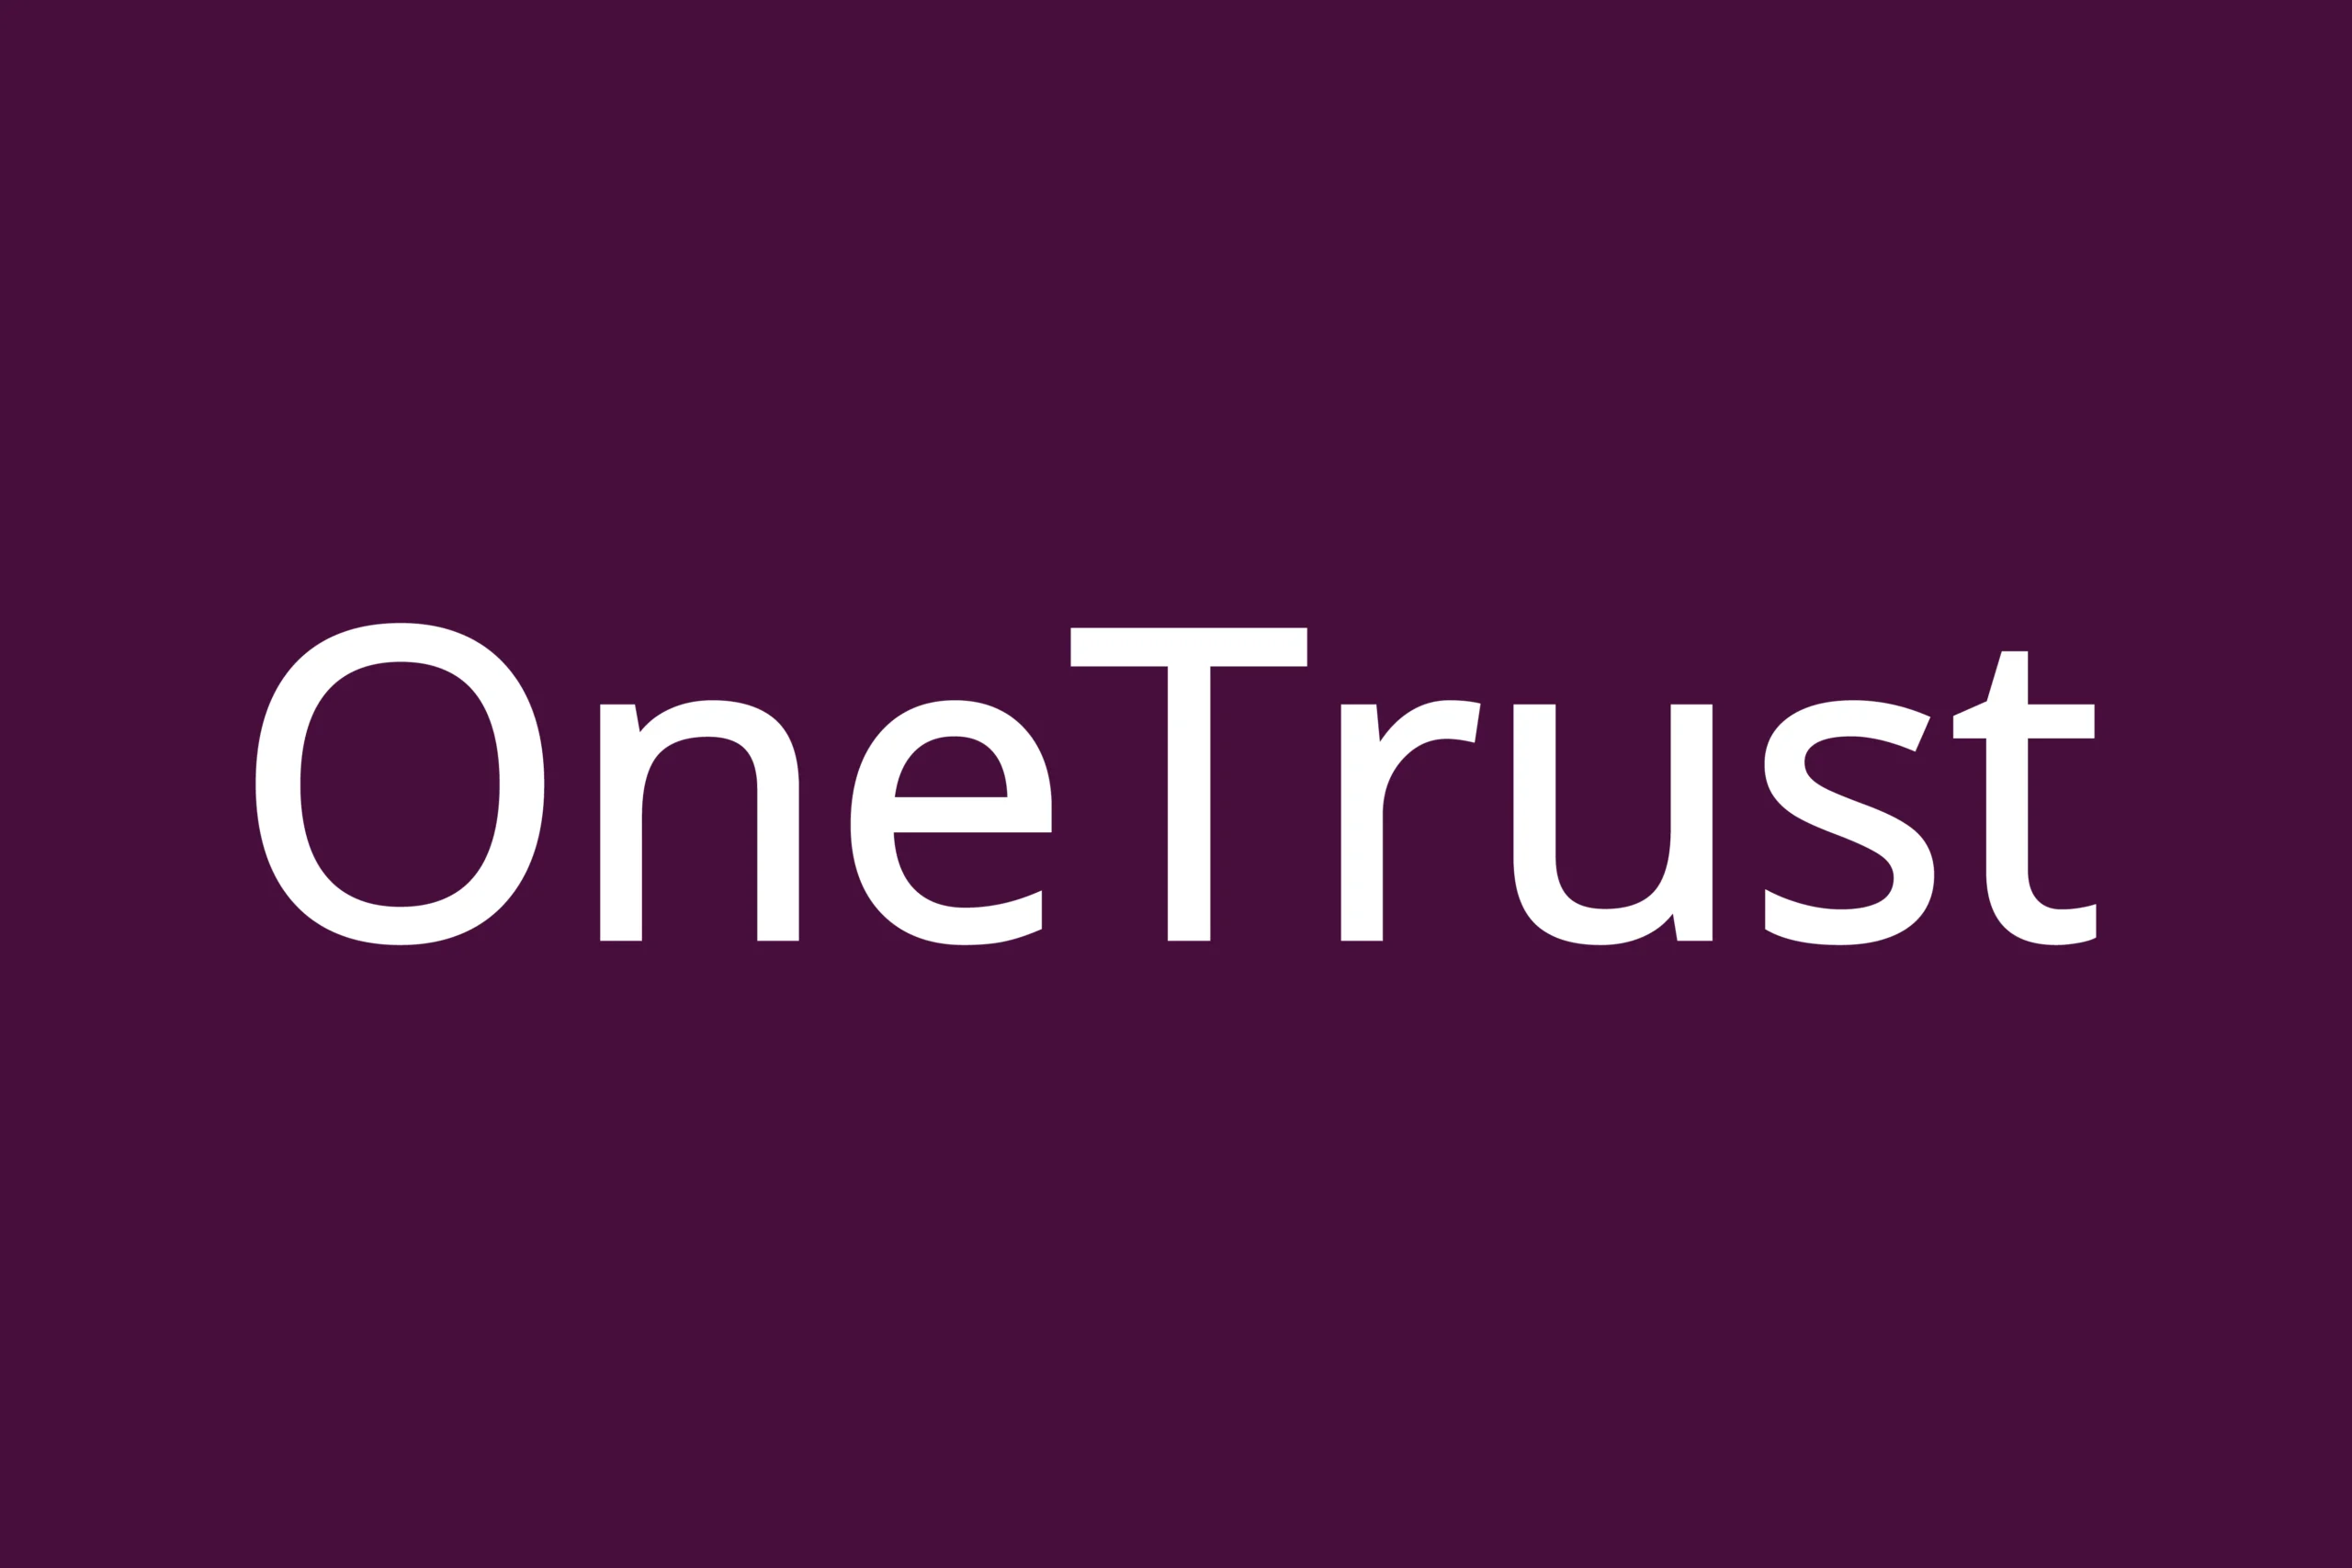 One trust